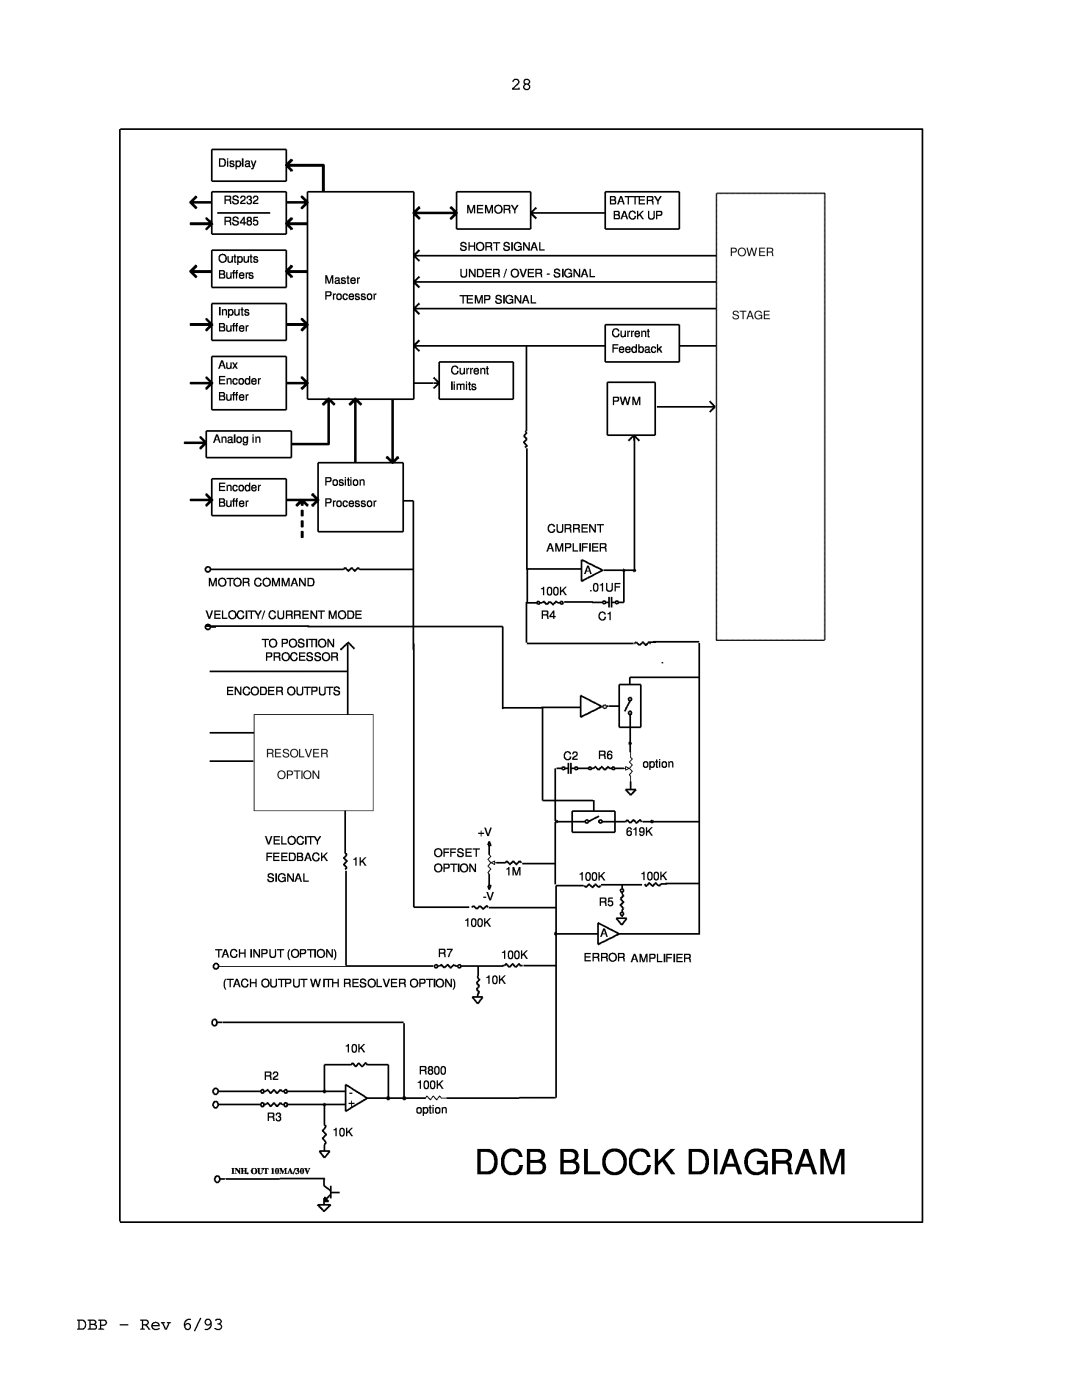 Elmo DBP SERIES manual Dcb Block Diagram, DBP - Rev 6/93 